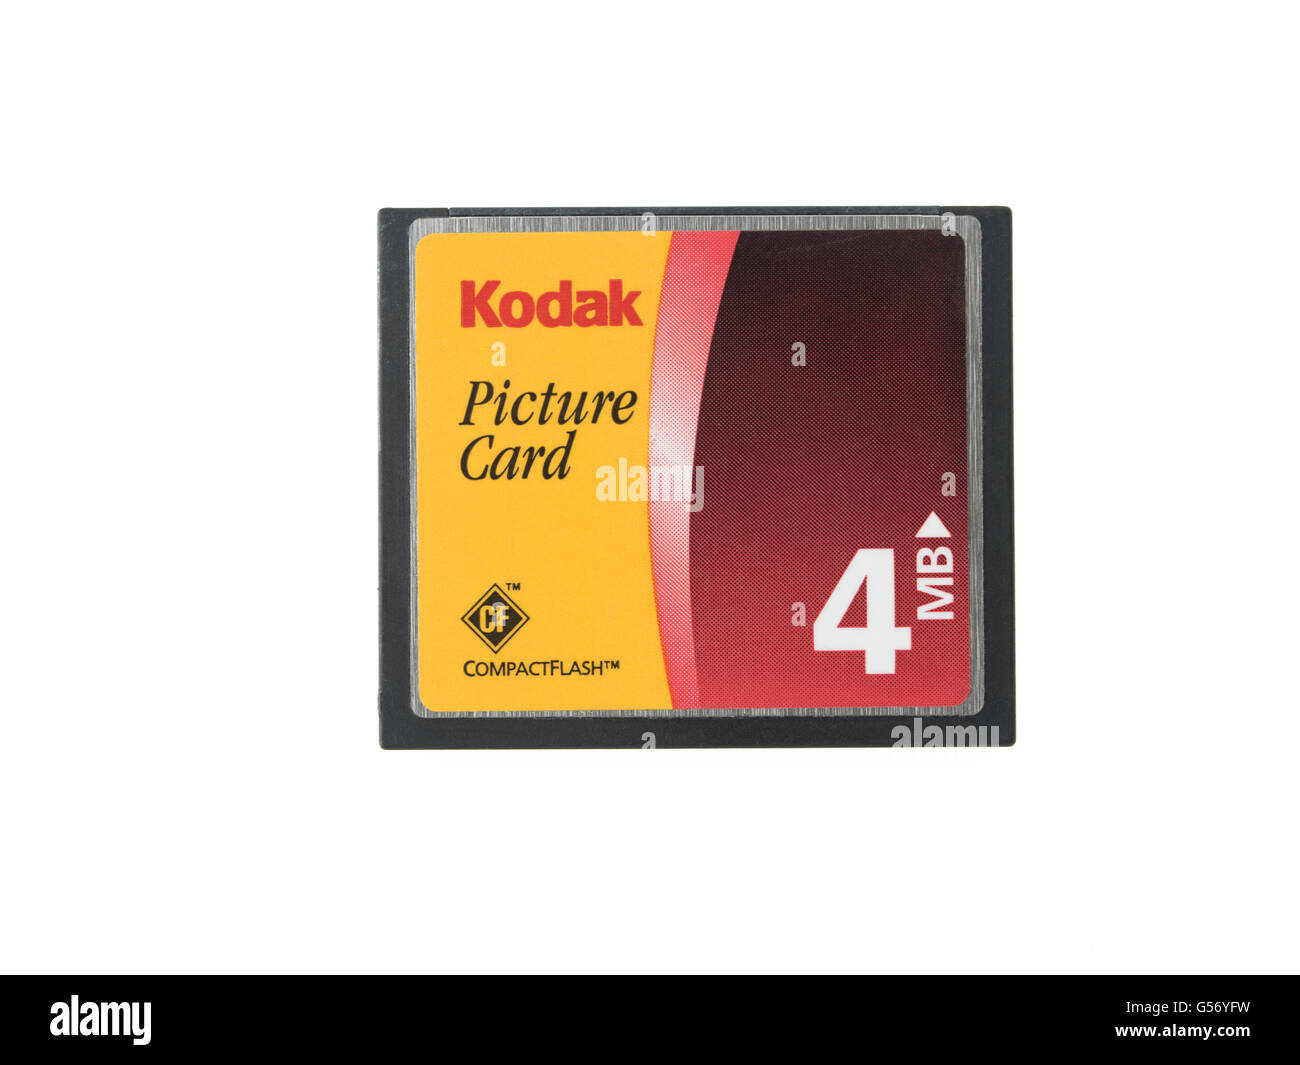 Kodak Compact Flash 4MB Picture Card digital storage media Stock Photo